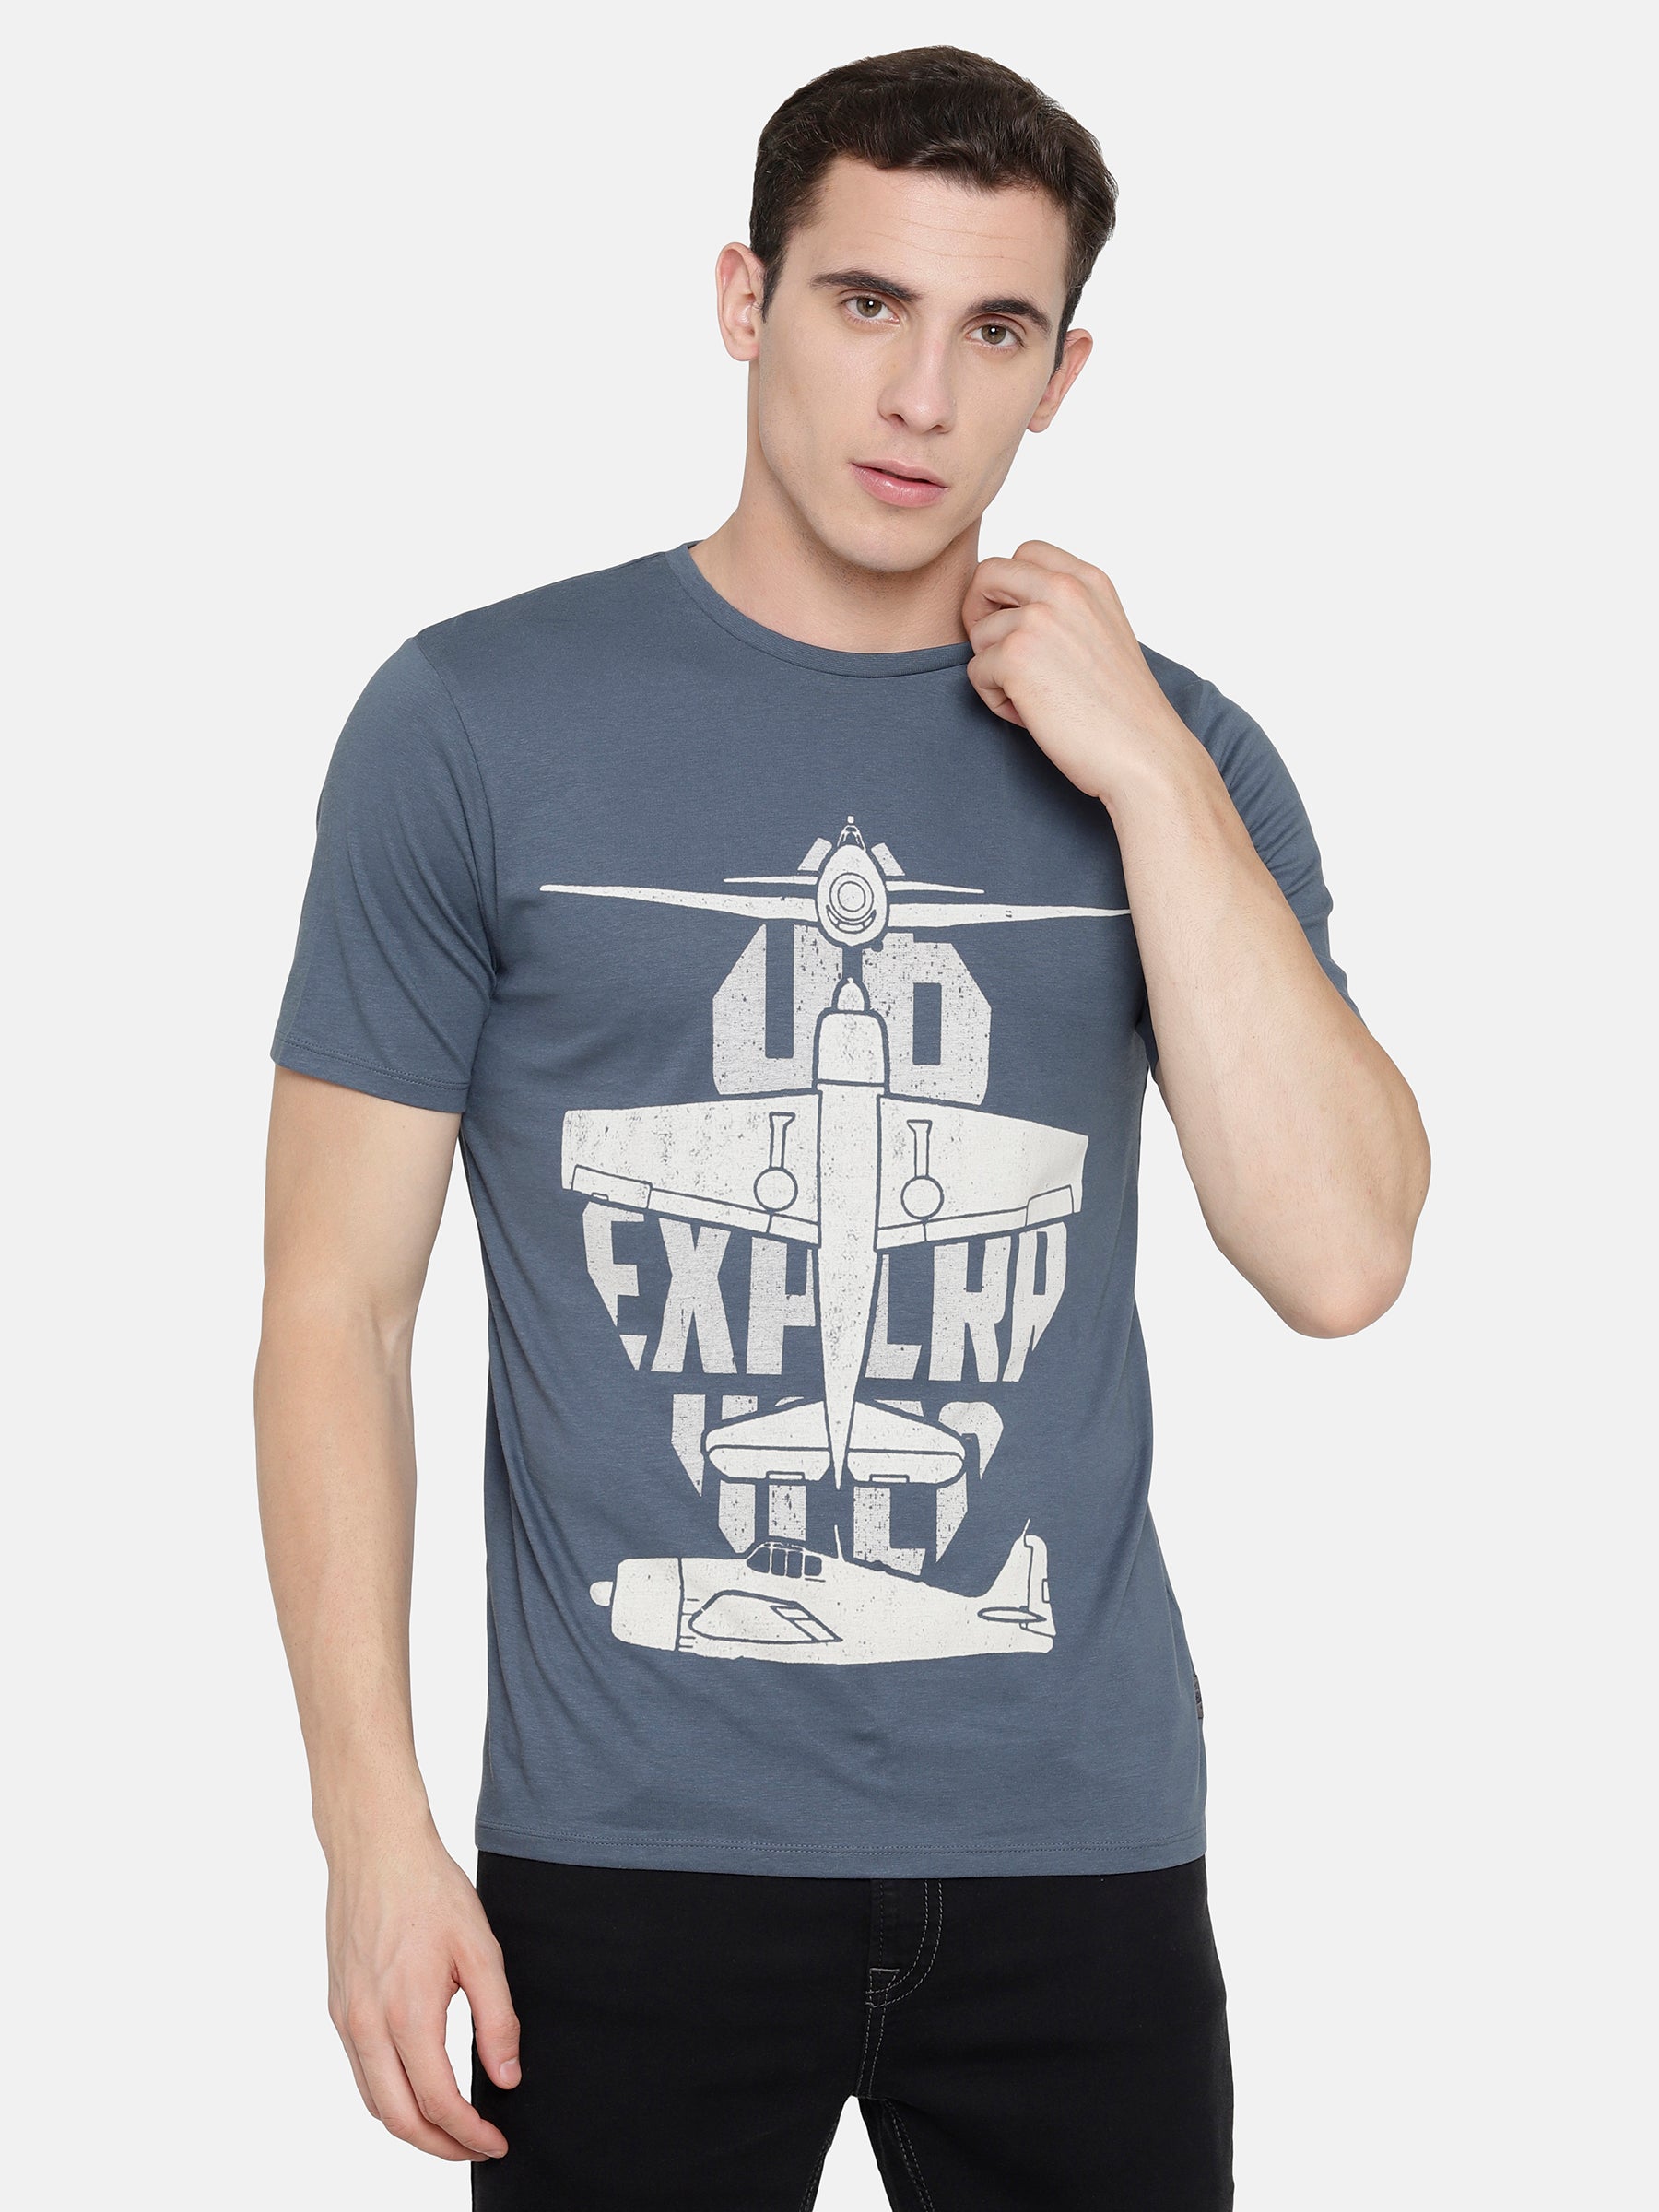 Mens Fashion Shopping T- Shirts By Urbantouch - Urban Clothing Co.